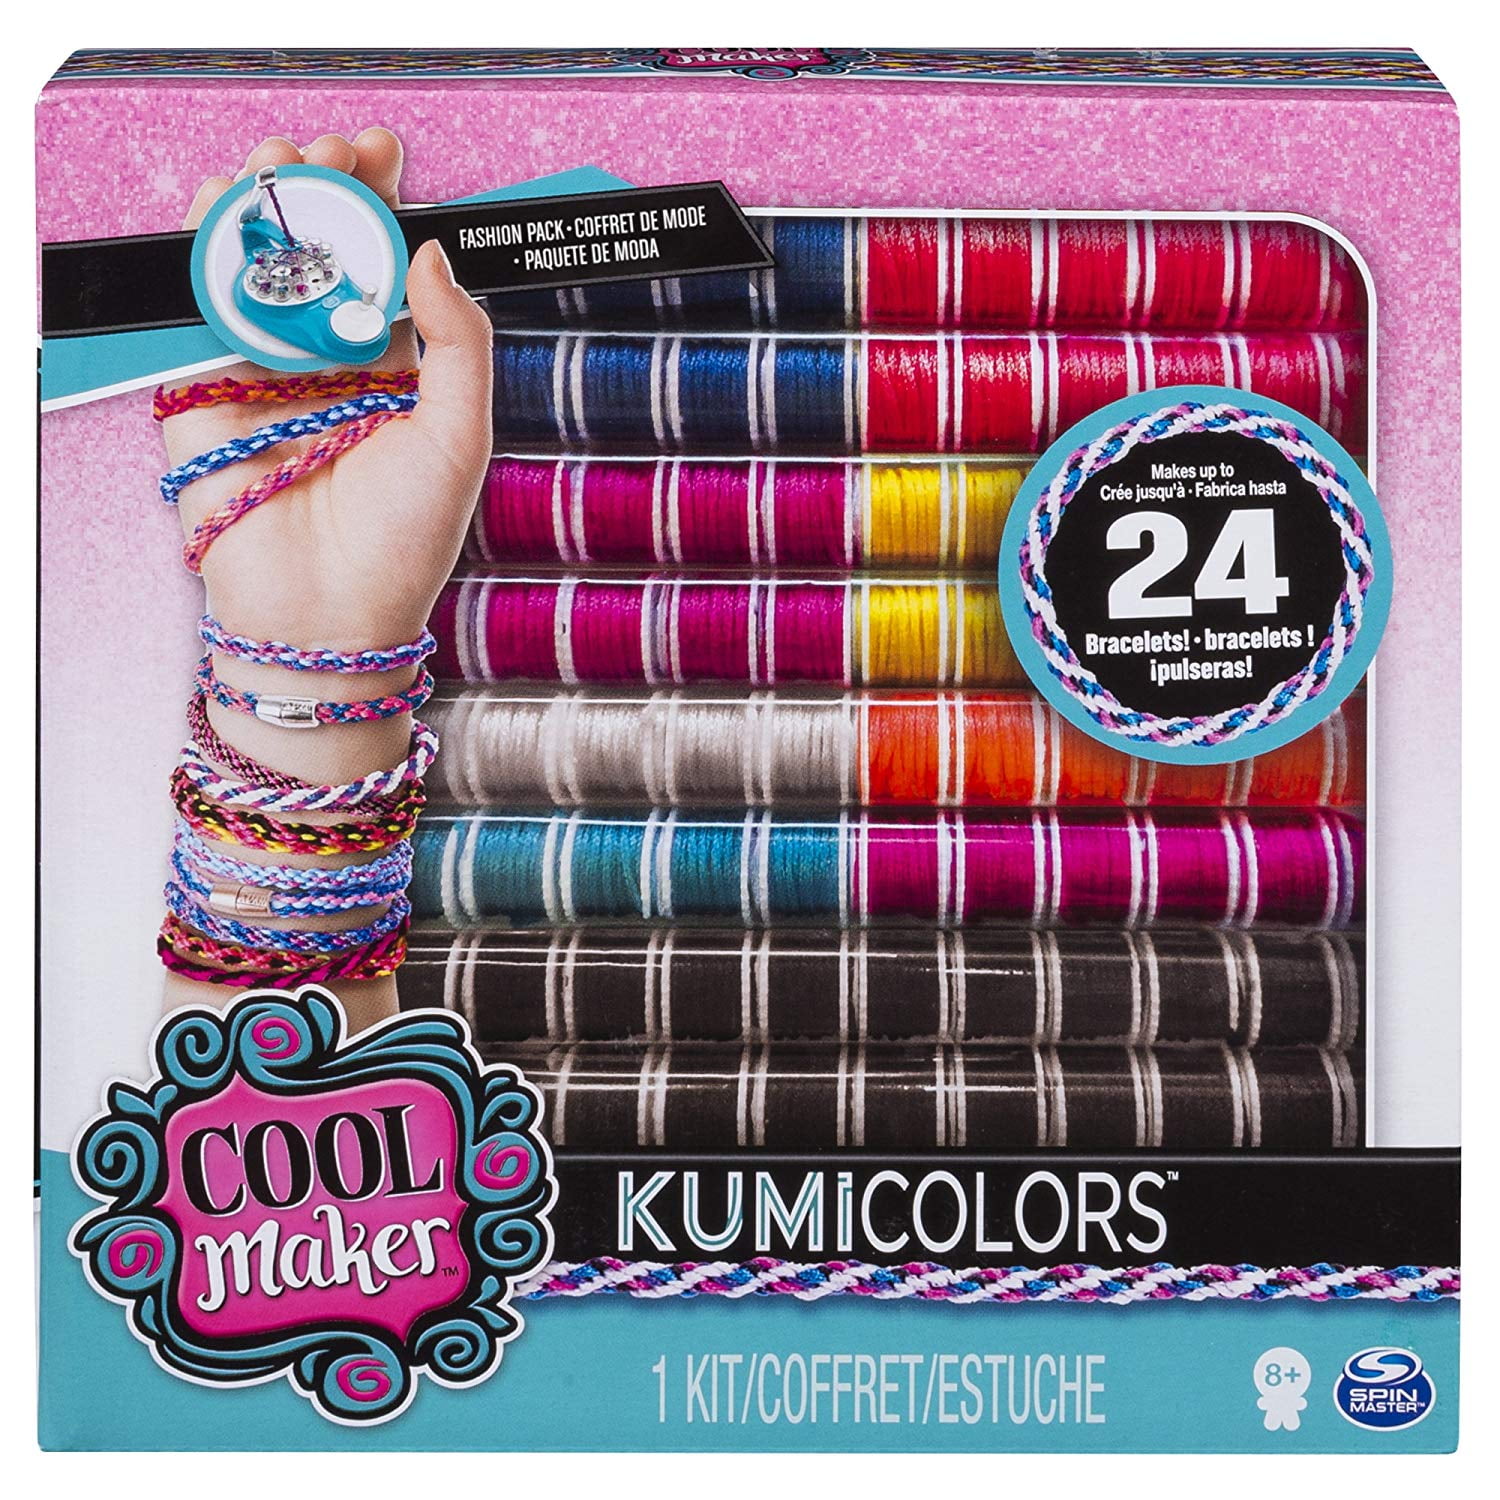 Cool Maker Kumi Kreator Fashion Pack Bundle - Includes Kumi Jewels Fashion  Pack & Kumi Fantasy Fashion Pack 